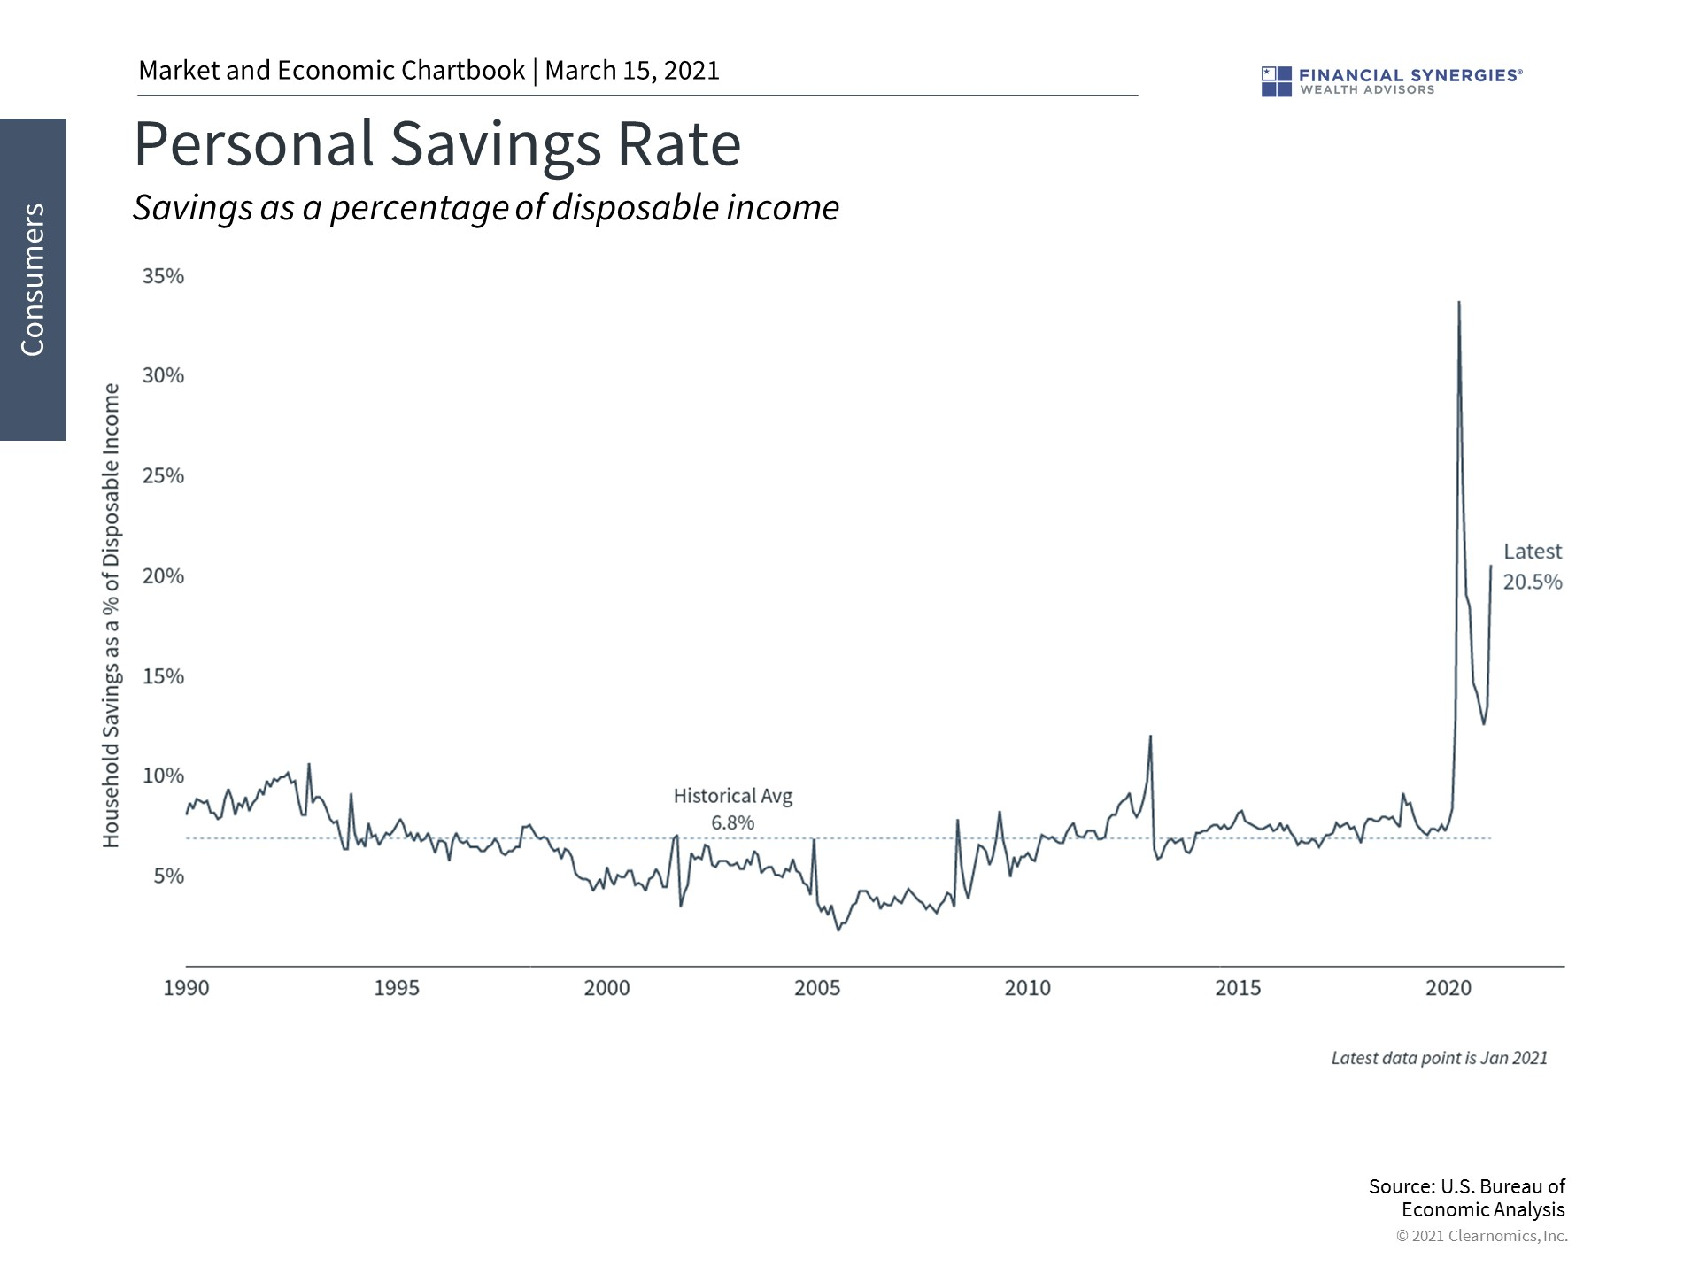 savings rate